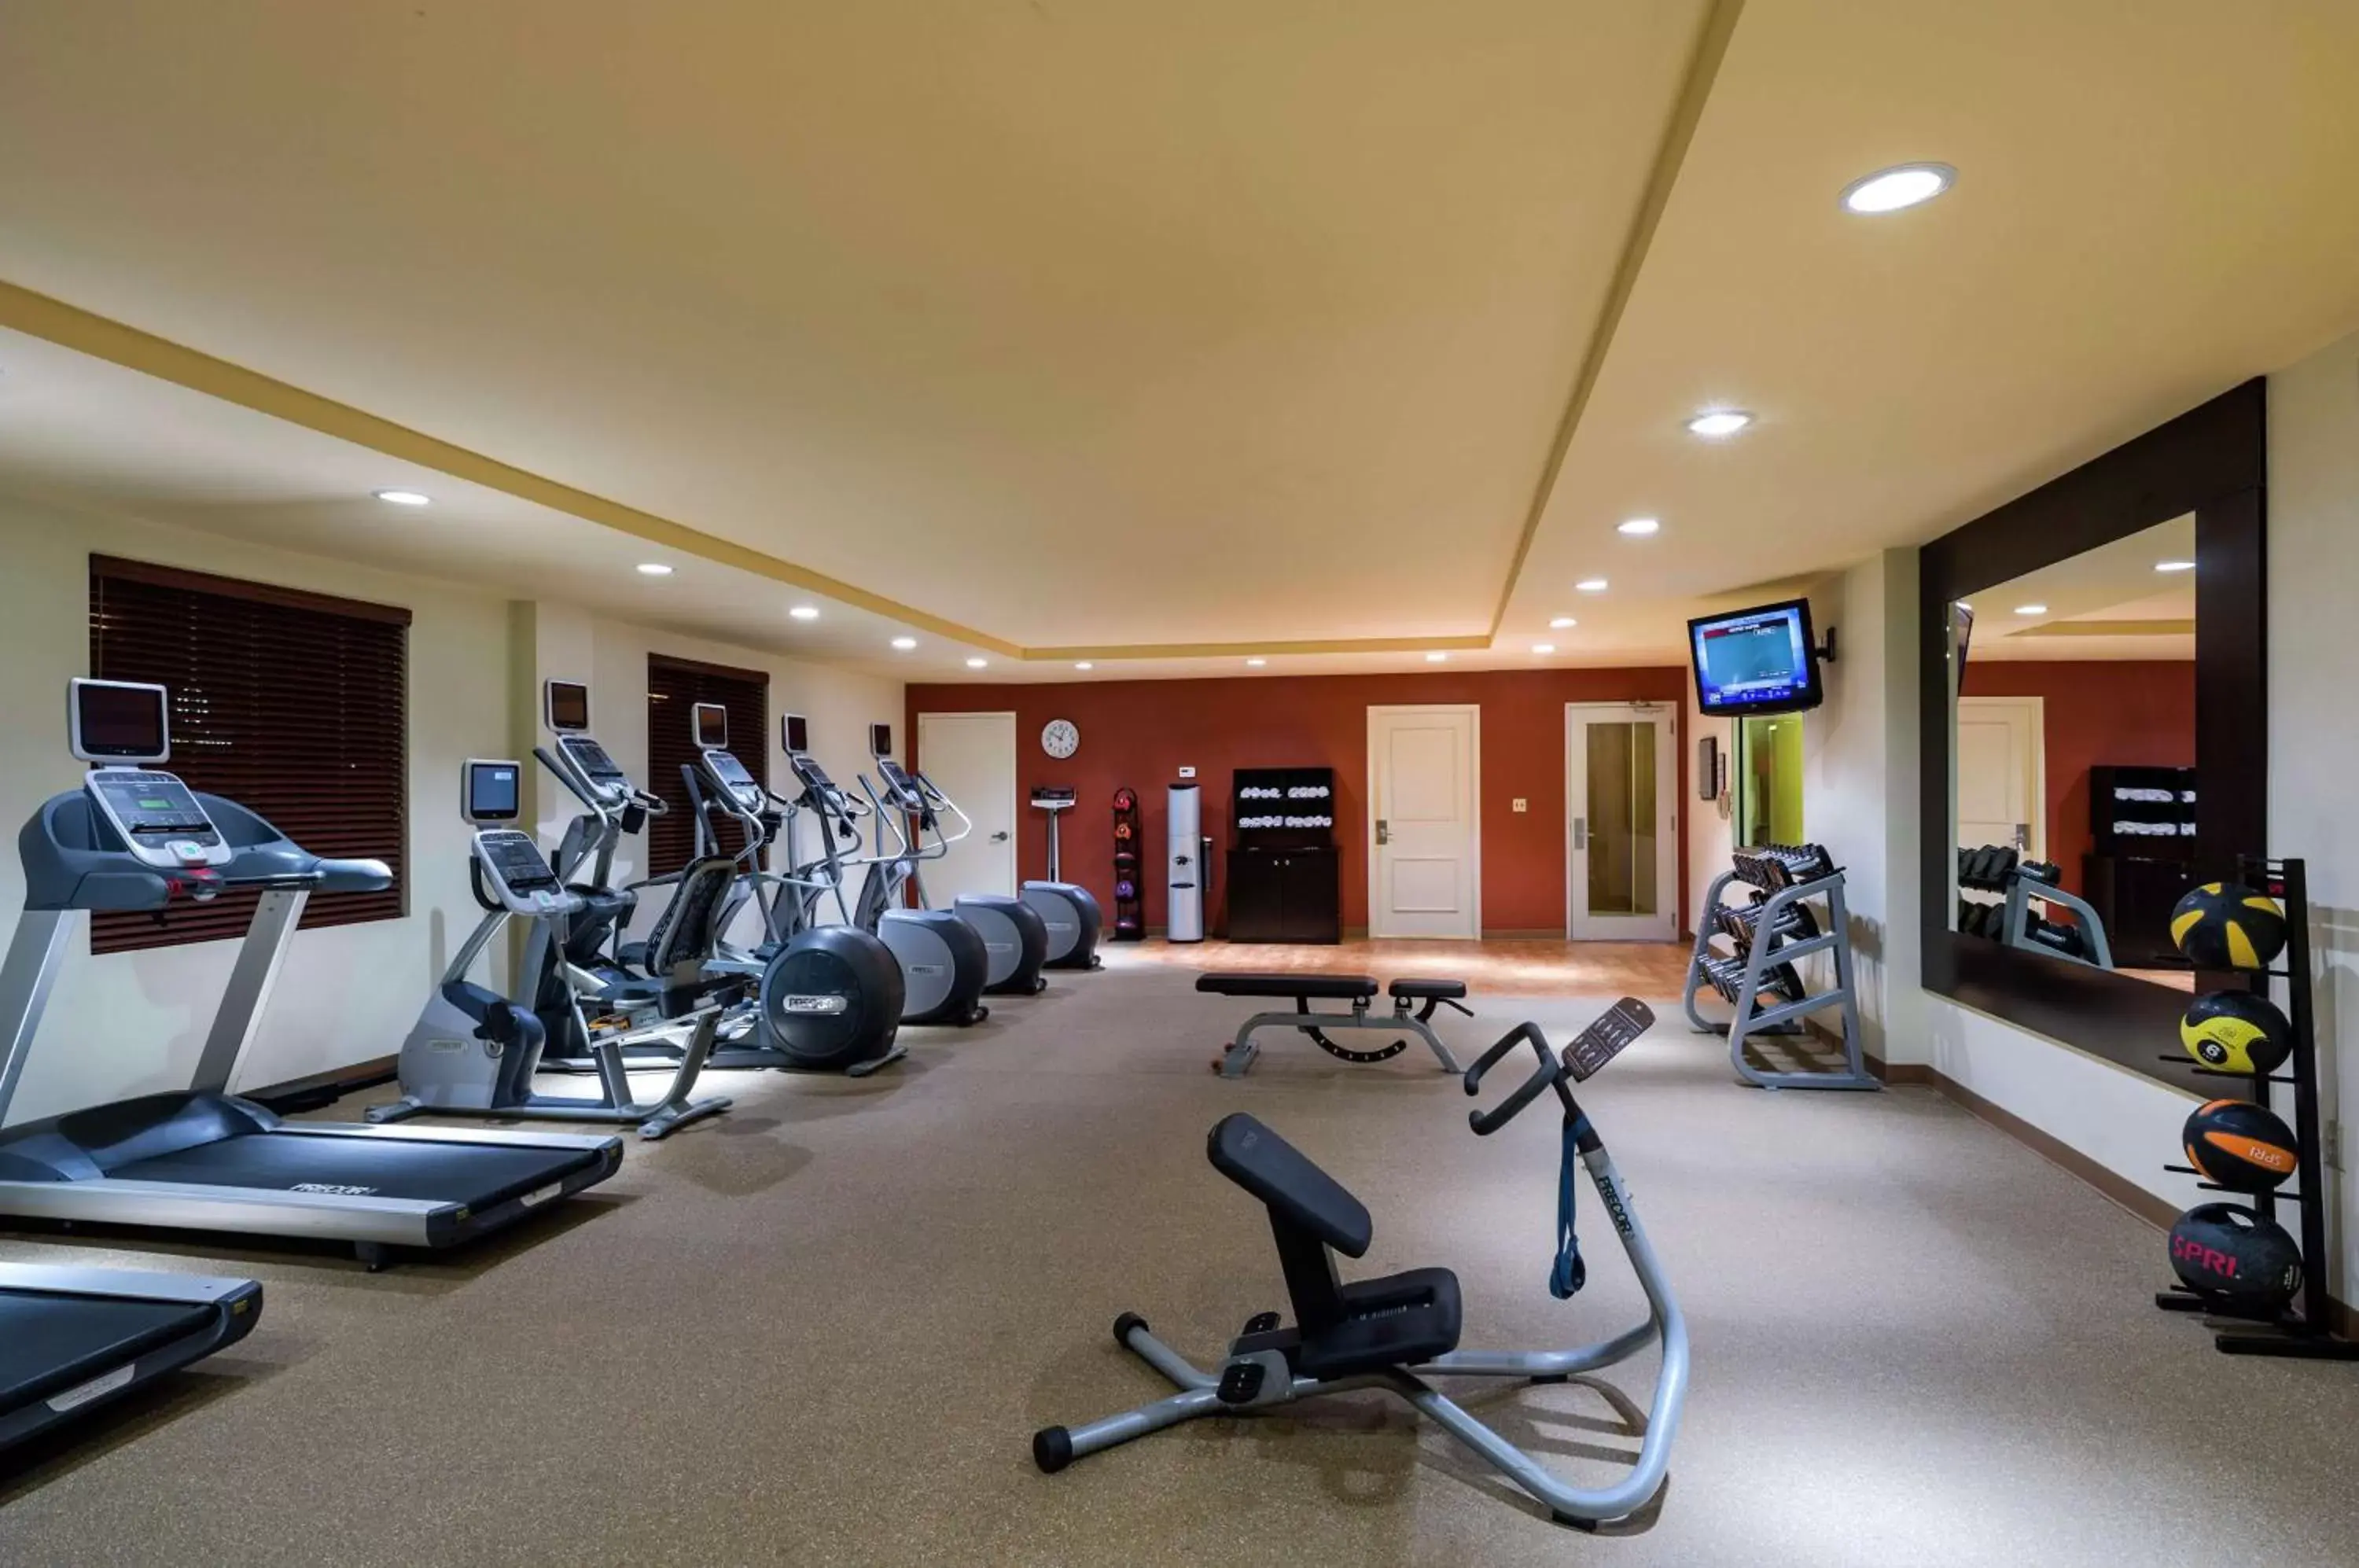 Fitness centre/facilities, Fitness Center/Facilities in Hilton Garden Inn Queens/JFK